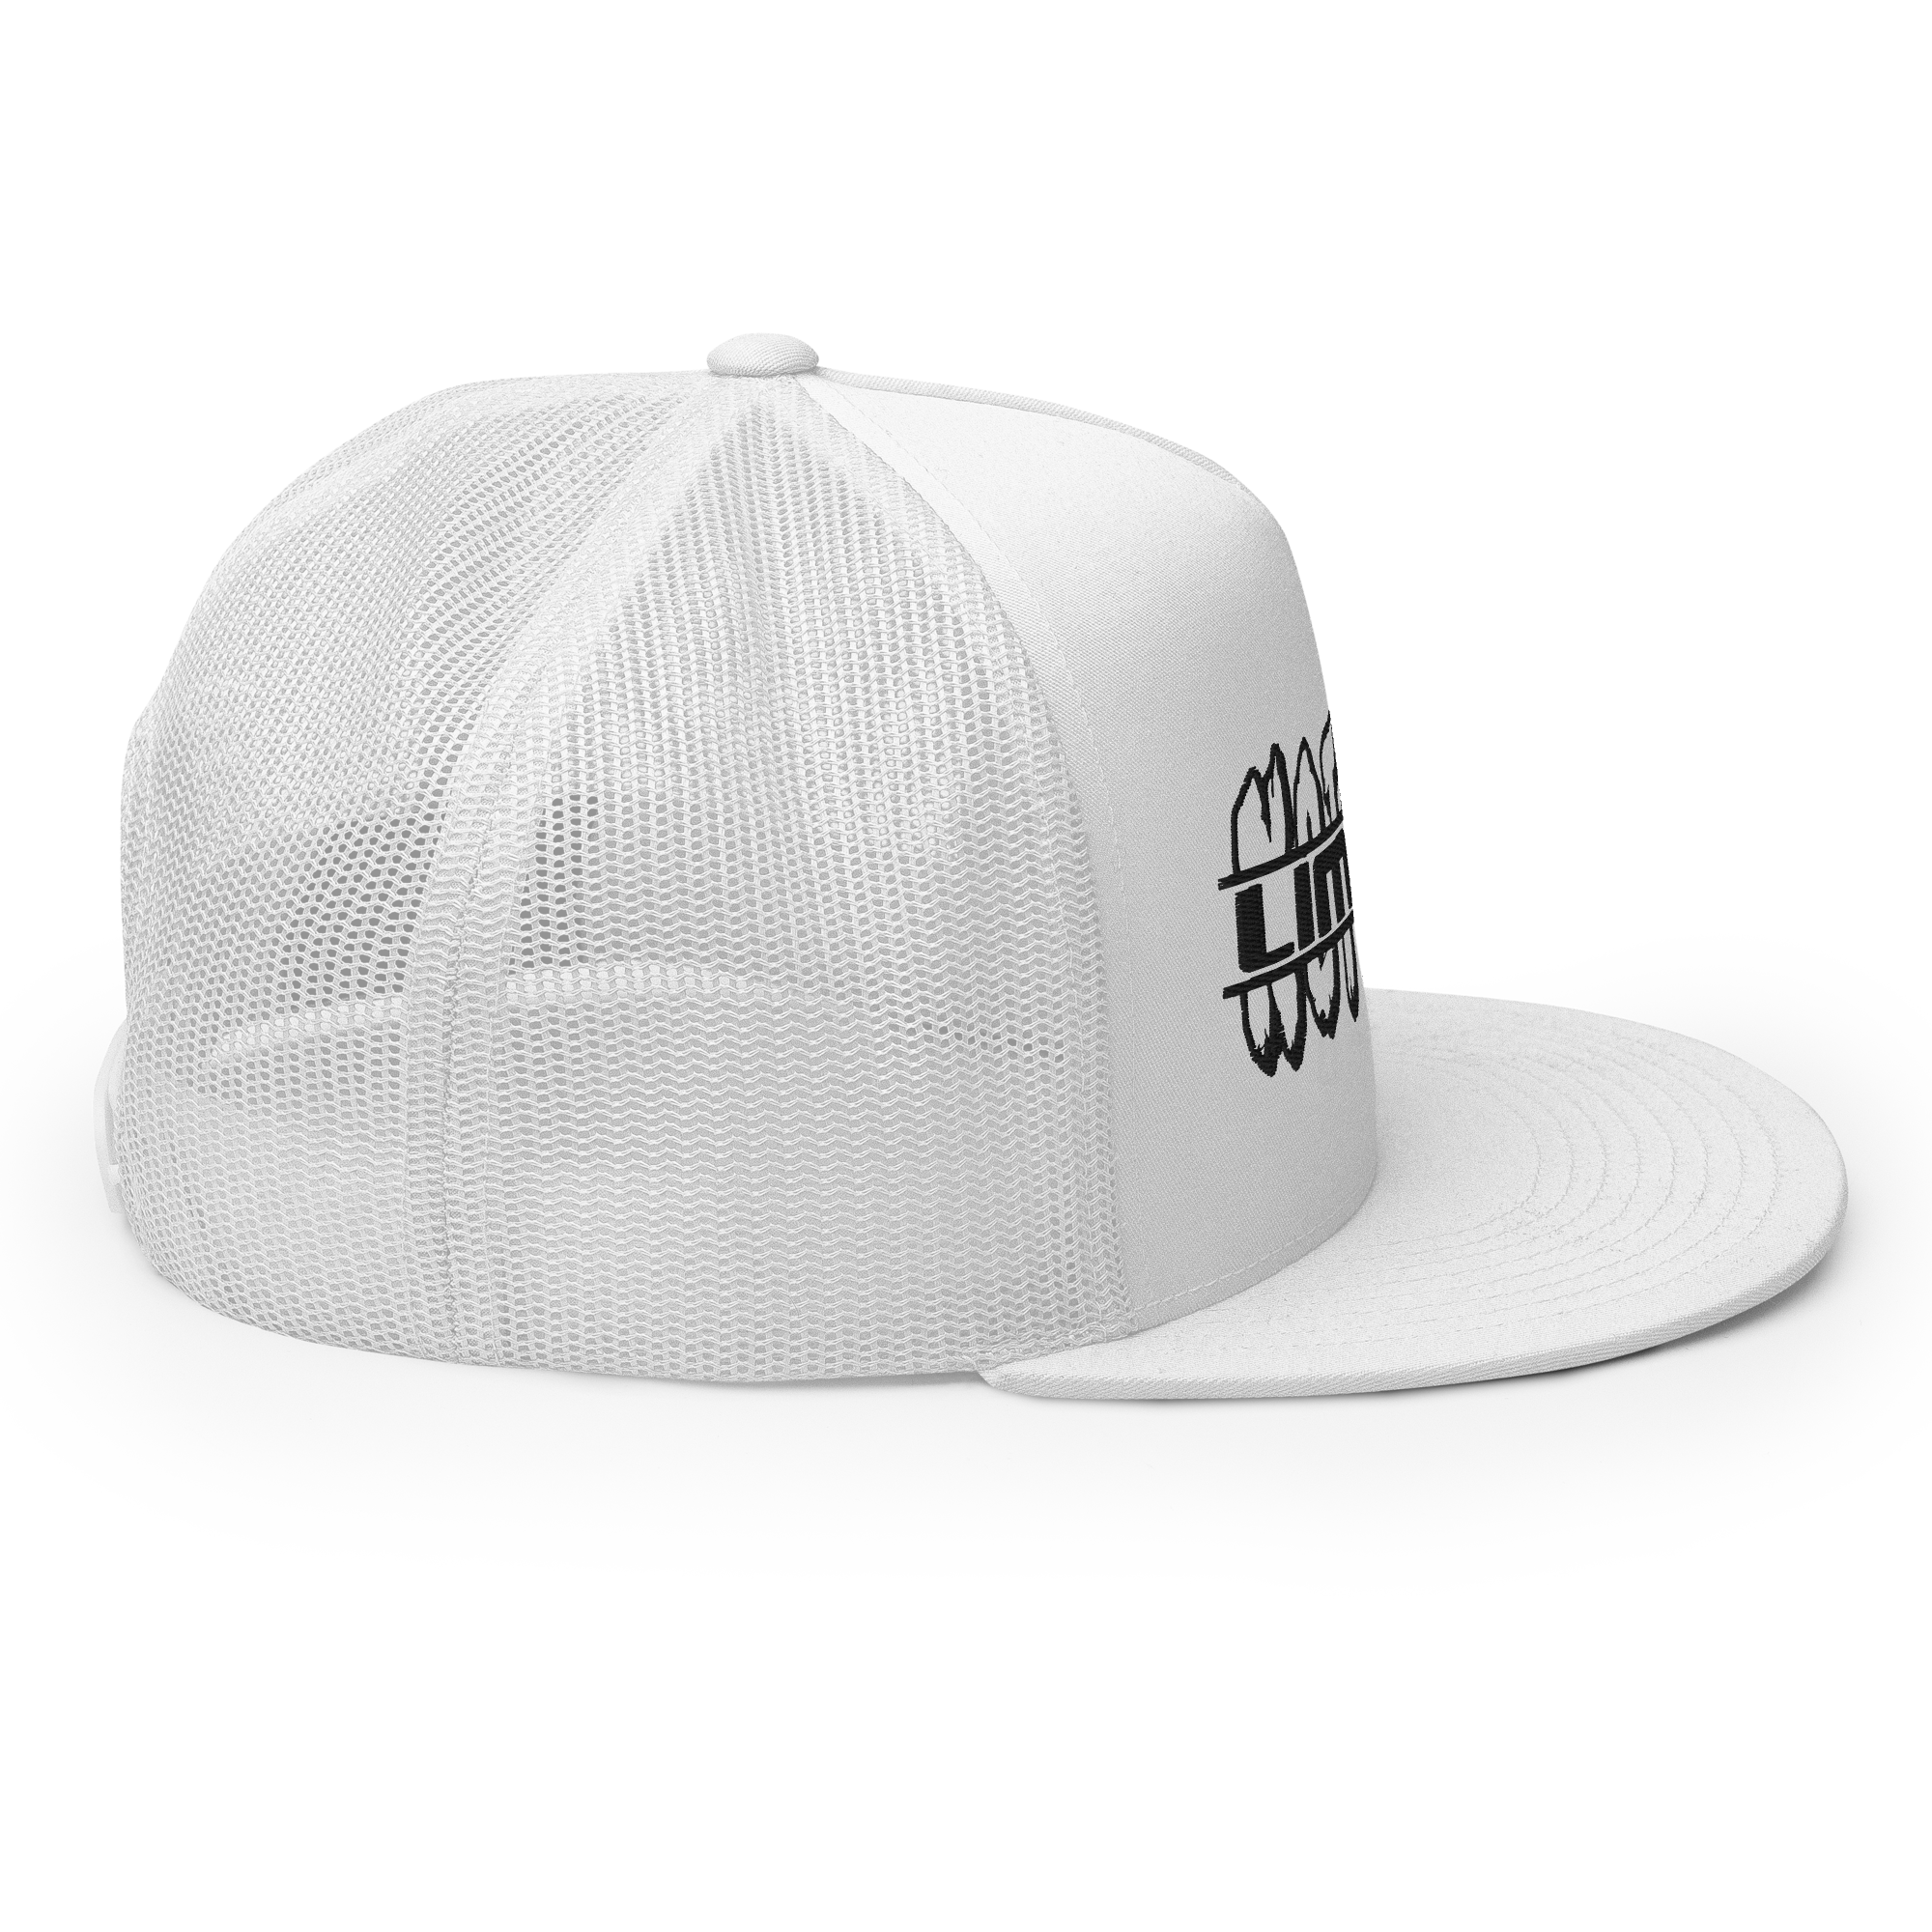 “Night Time Slime” Trucker hat